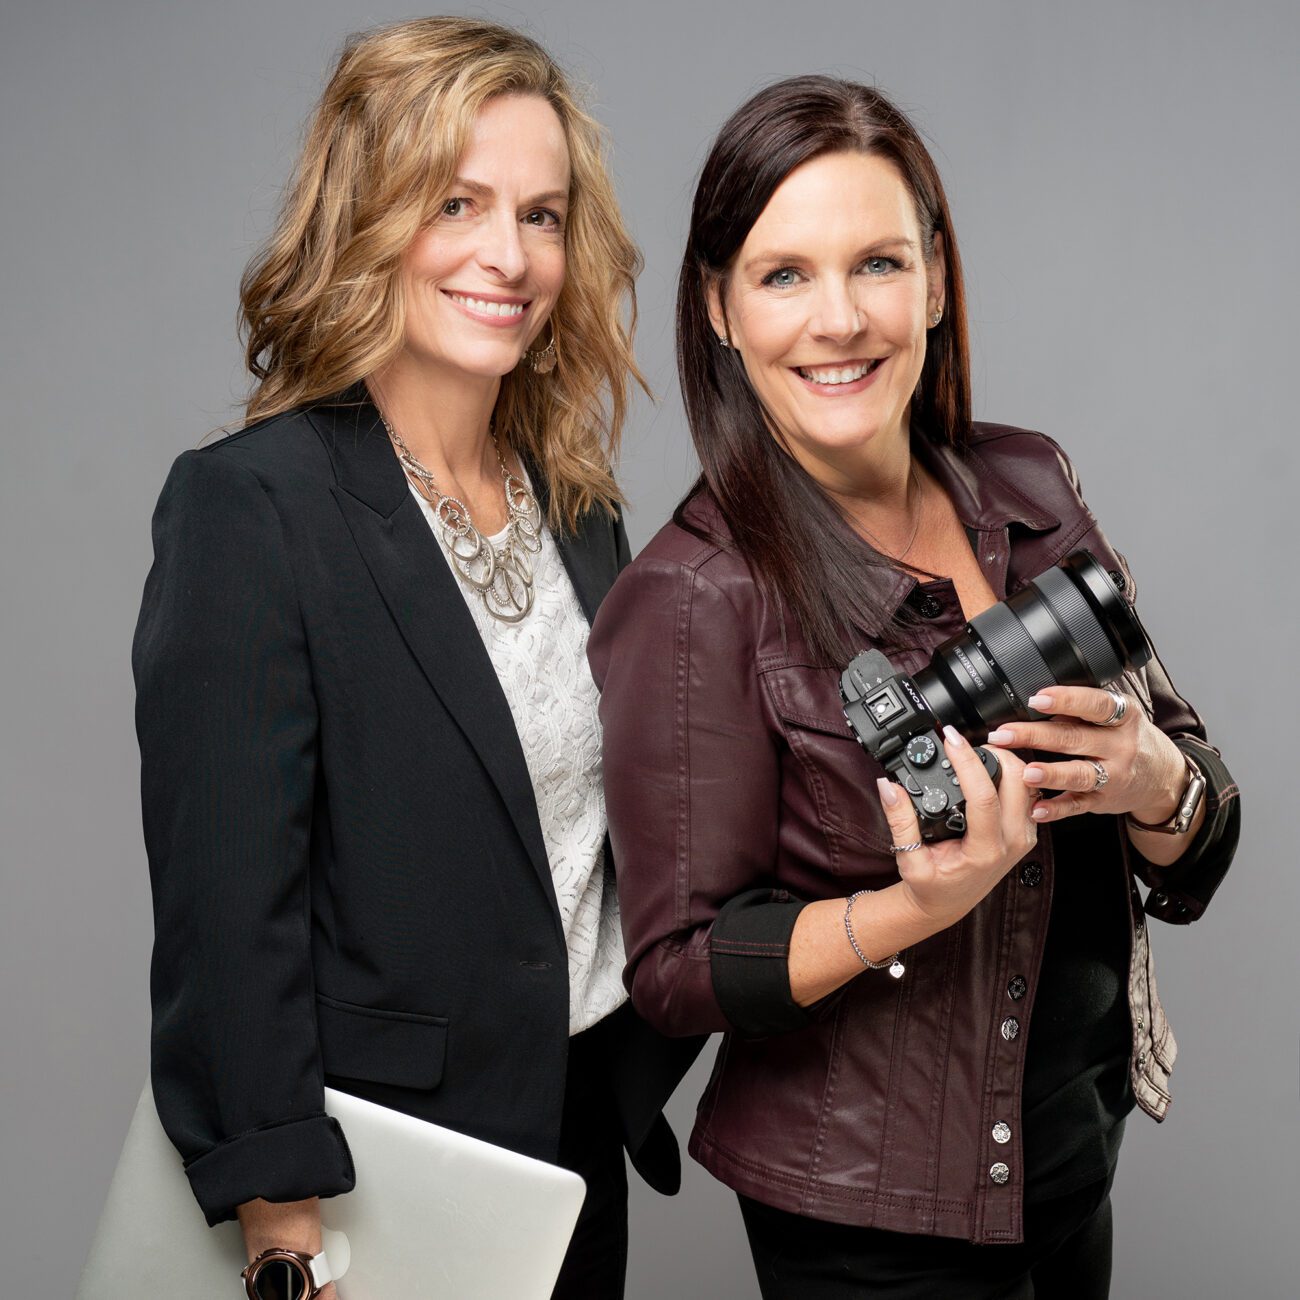 Kelly and Debbie Professional Photographer Team Springboro Ohio